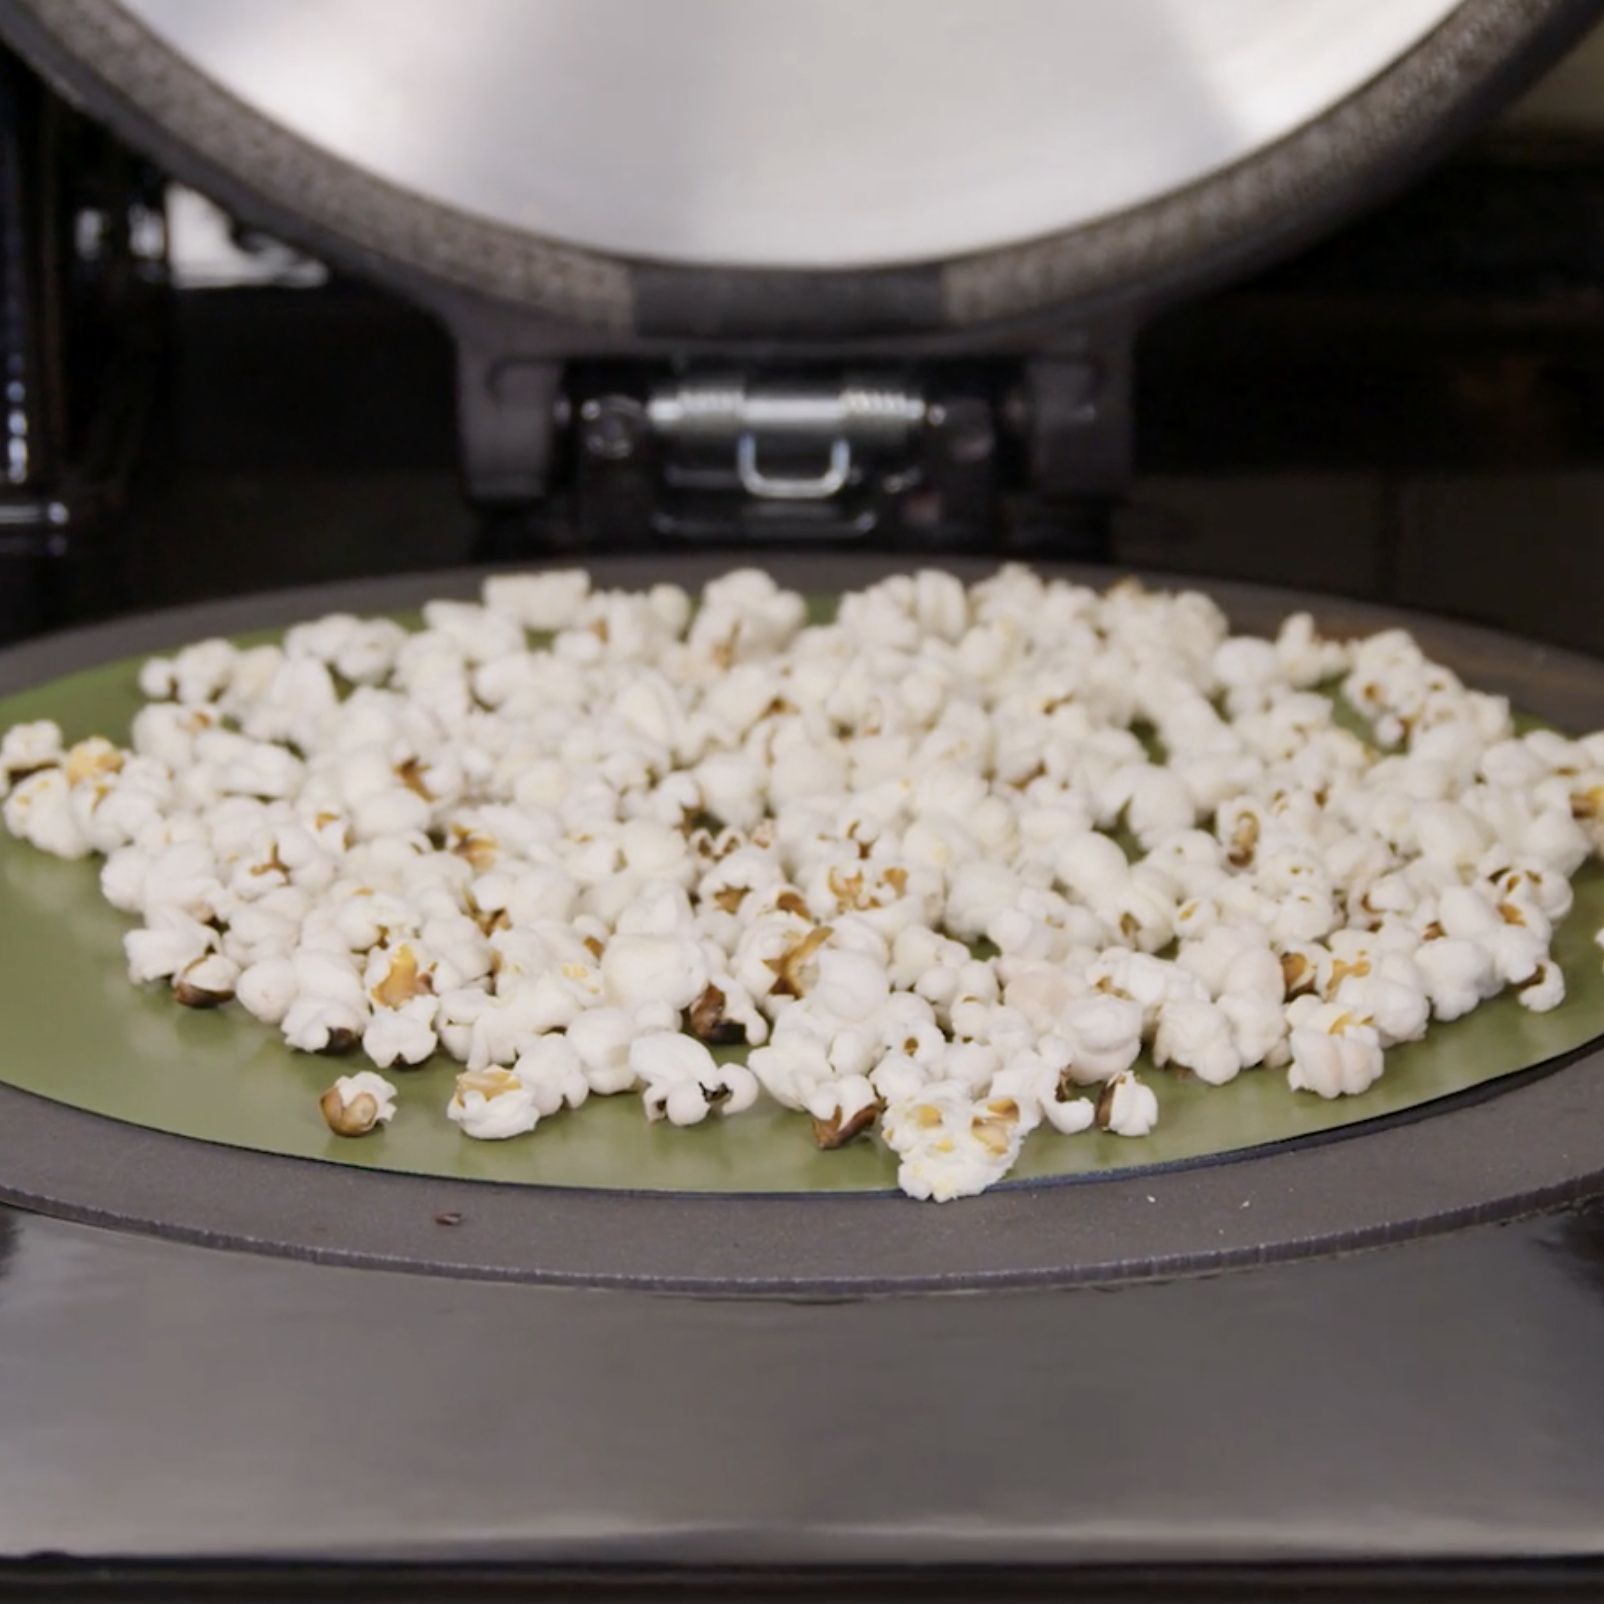 Popcorn made on an Aga range cooker!